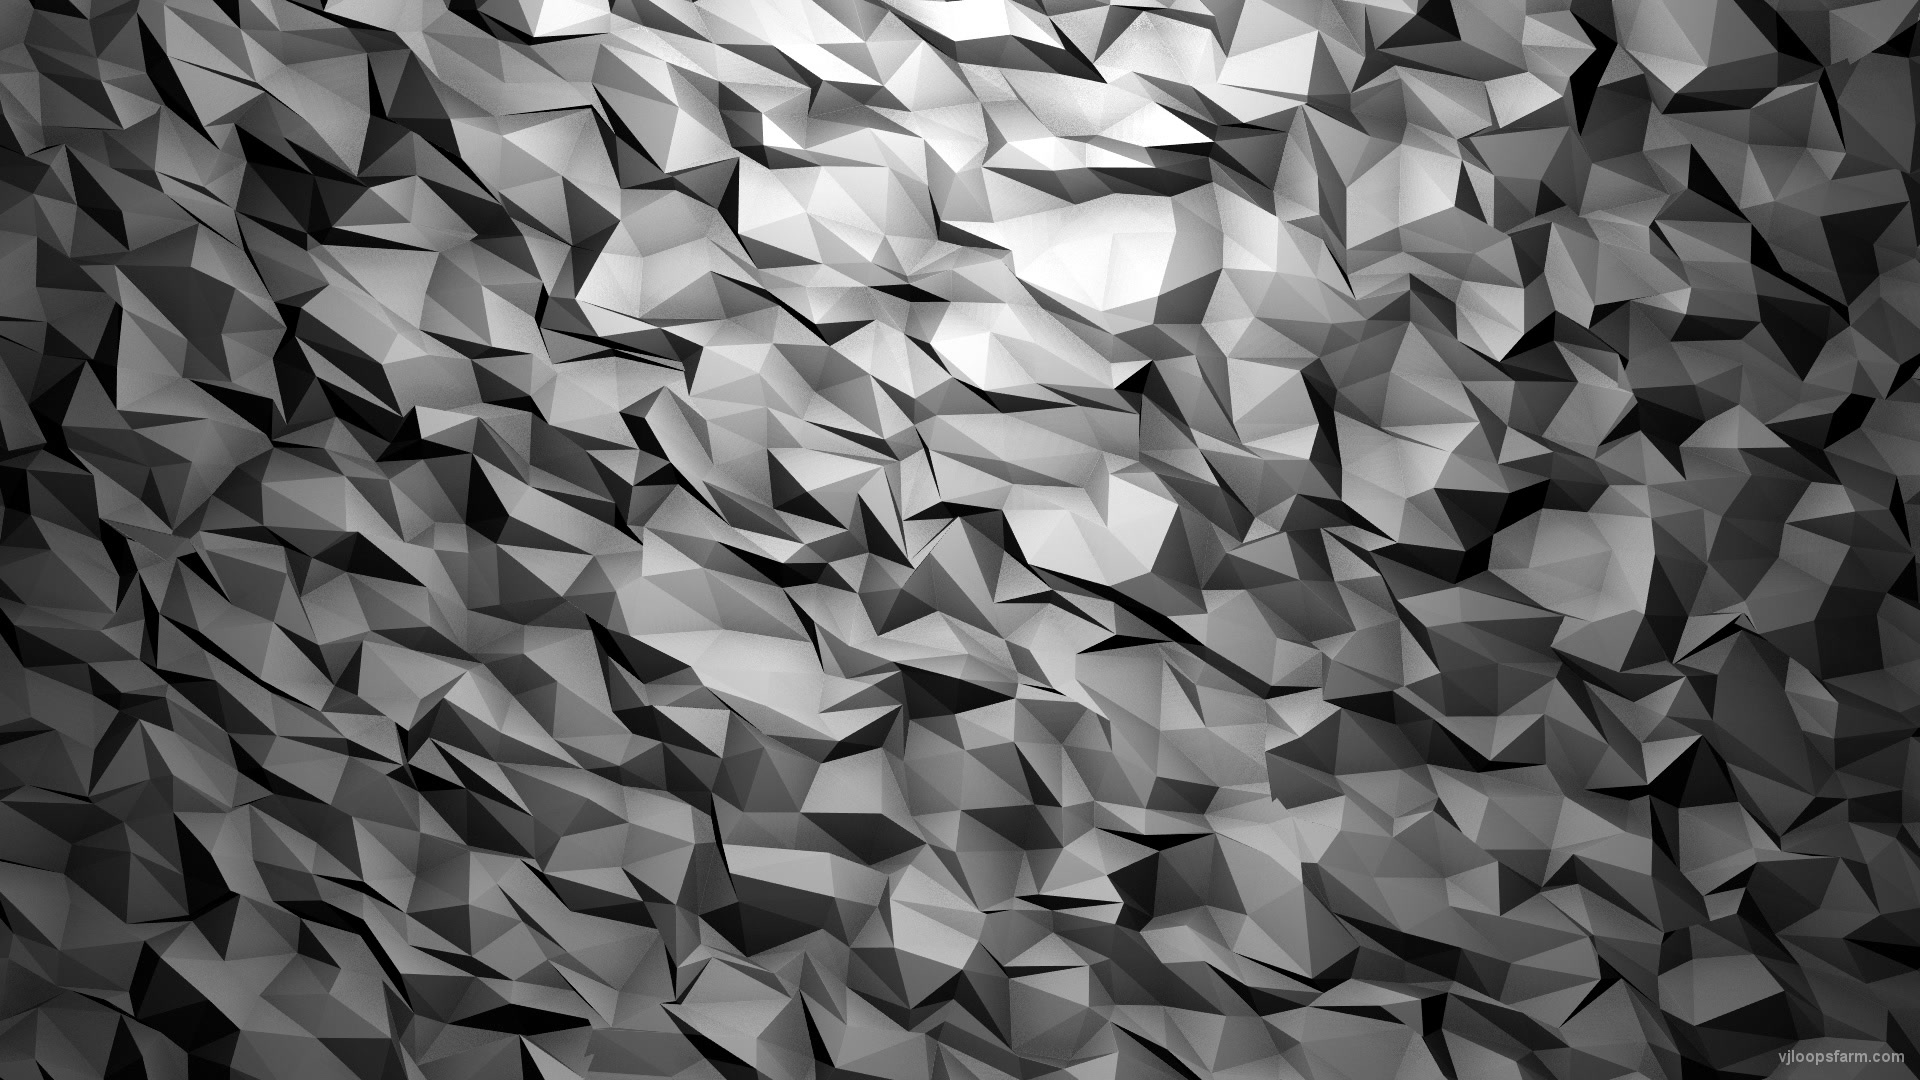 Polygonal Wall with intro small polygons animation | VJ Loops Farm